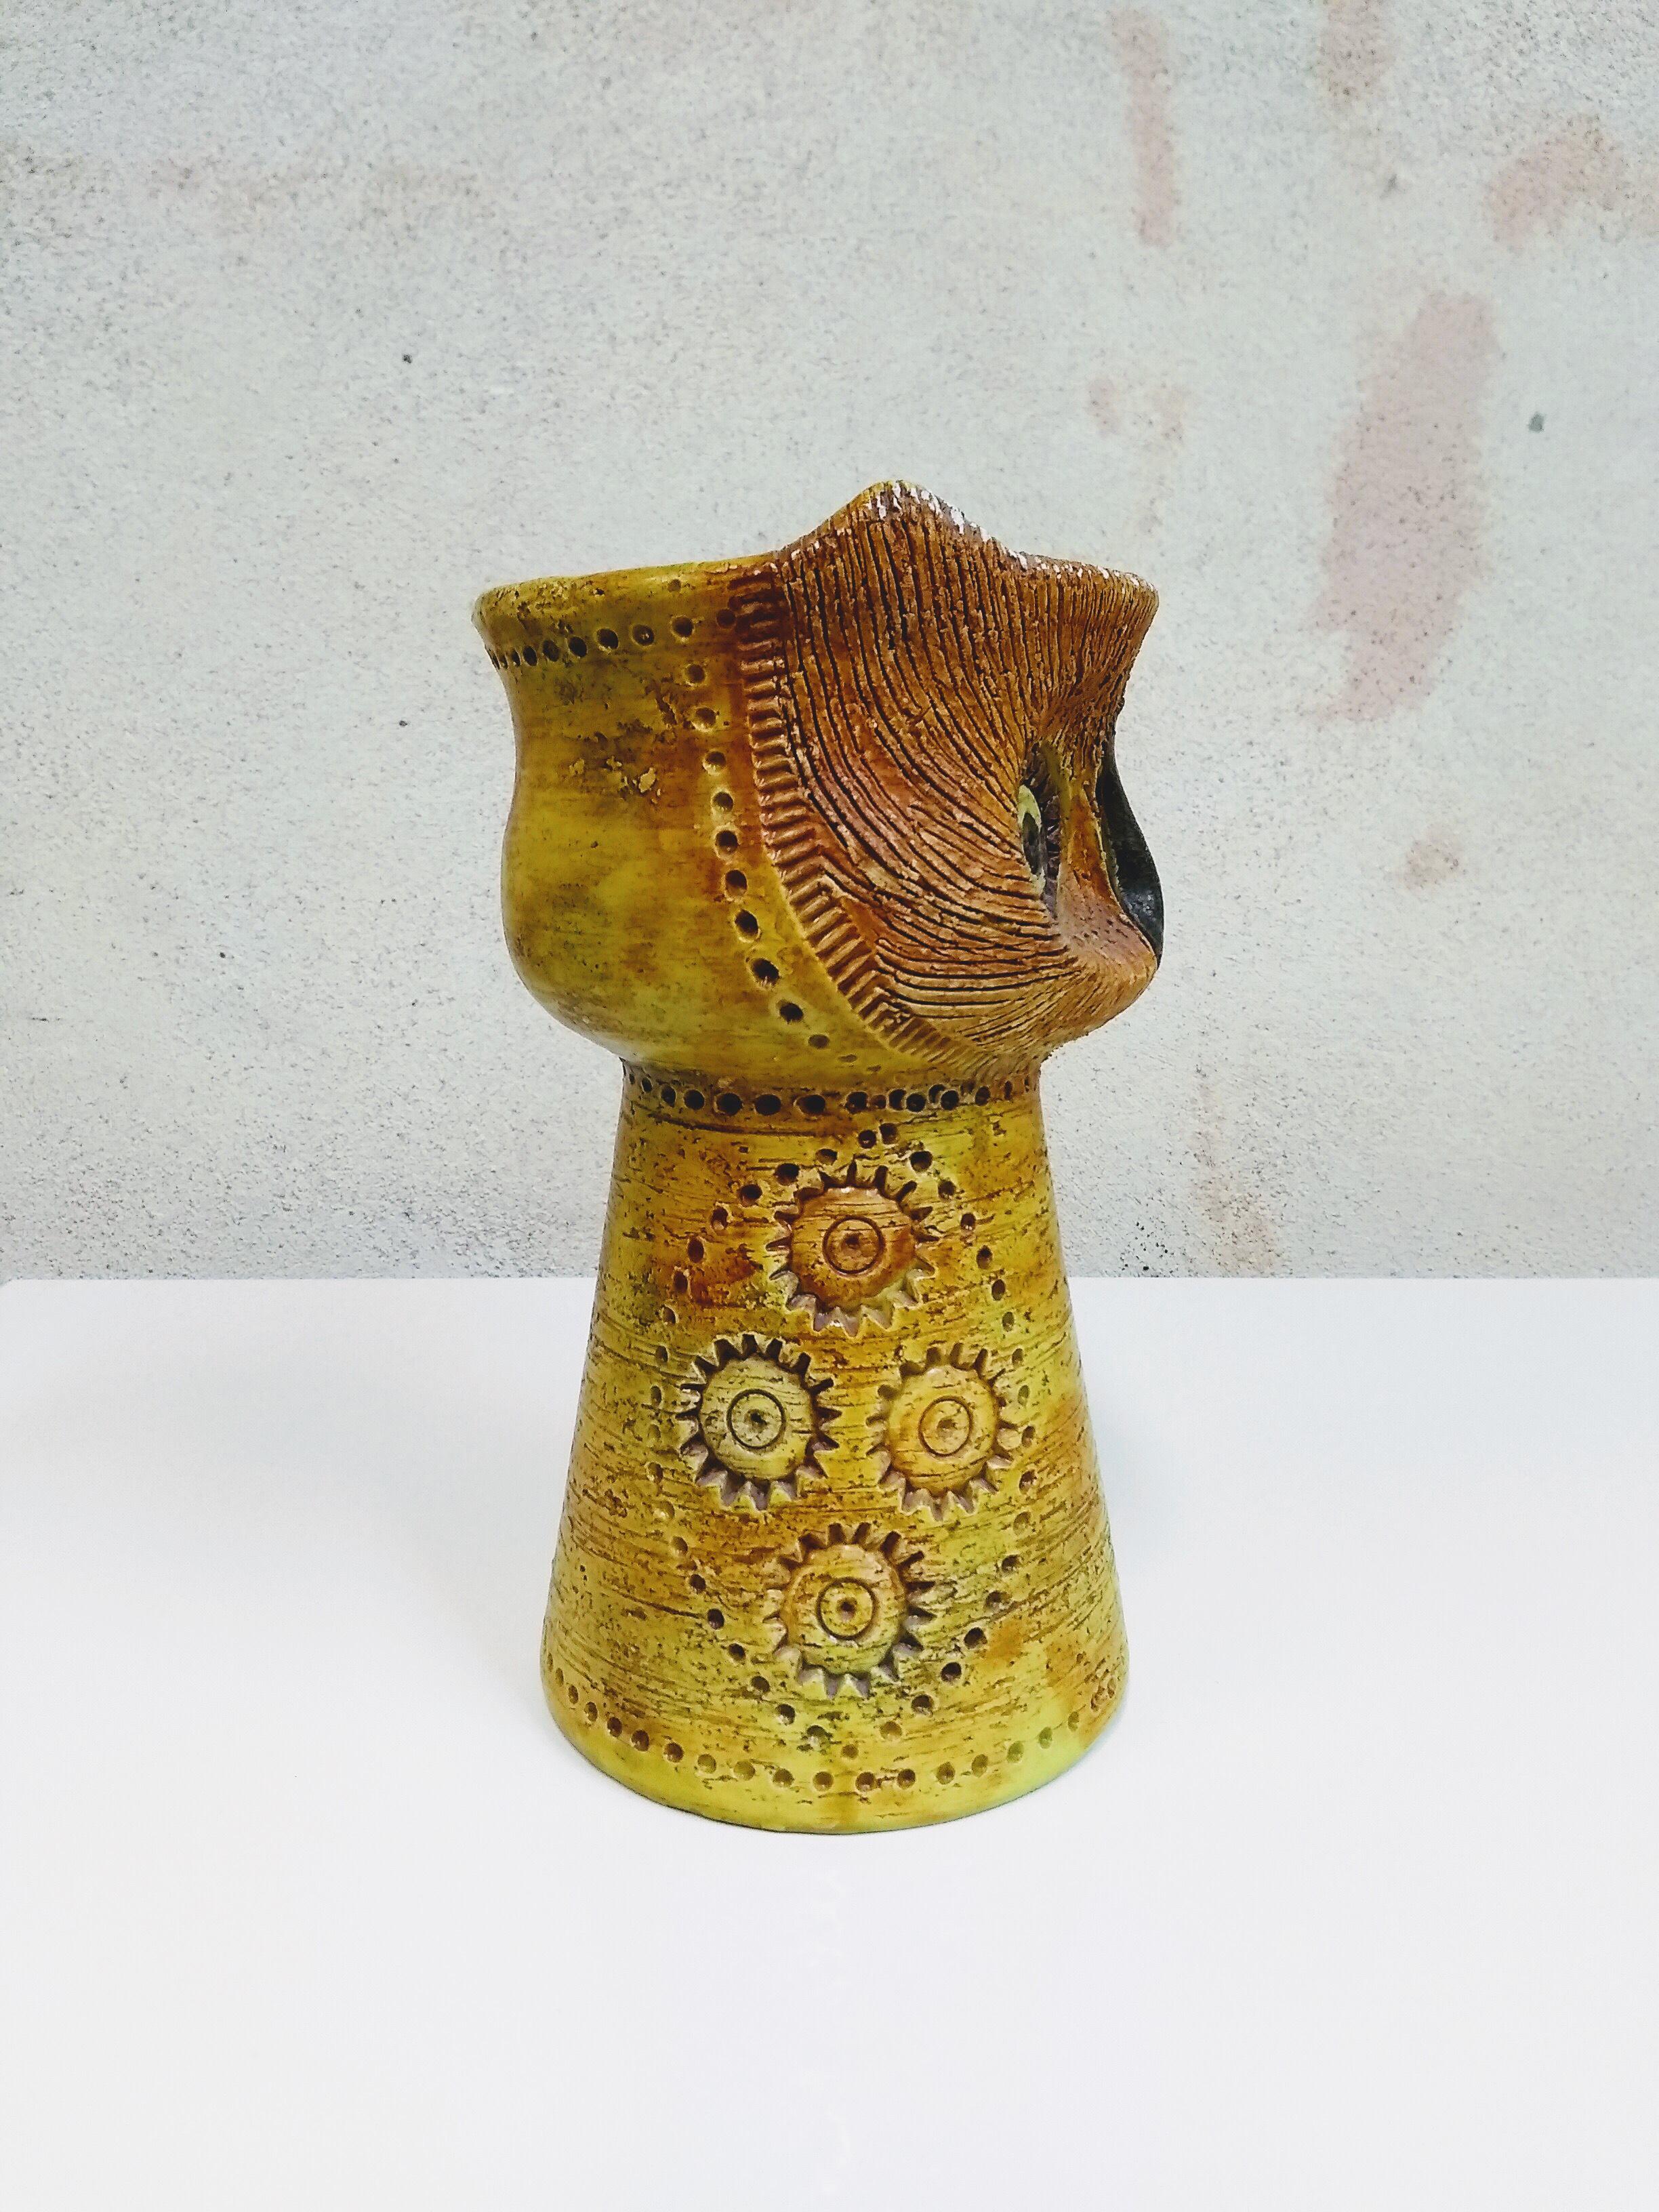 Aldo Londi Italian Ceramic Owl for Bitossi imported by Rosenthal and Netter 1